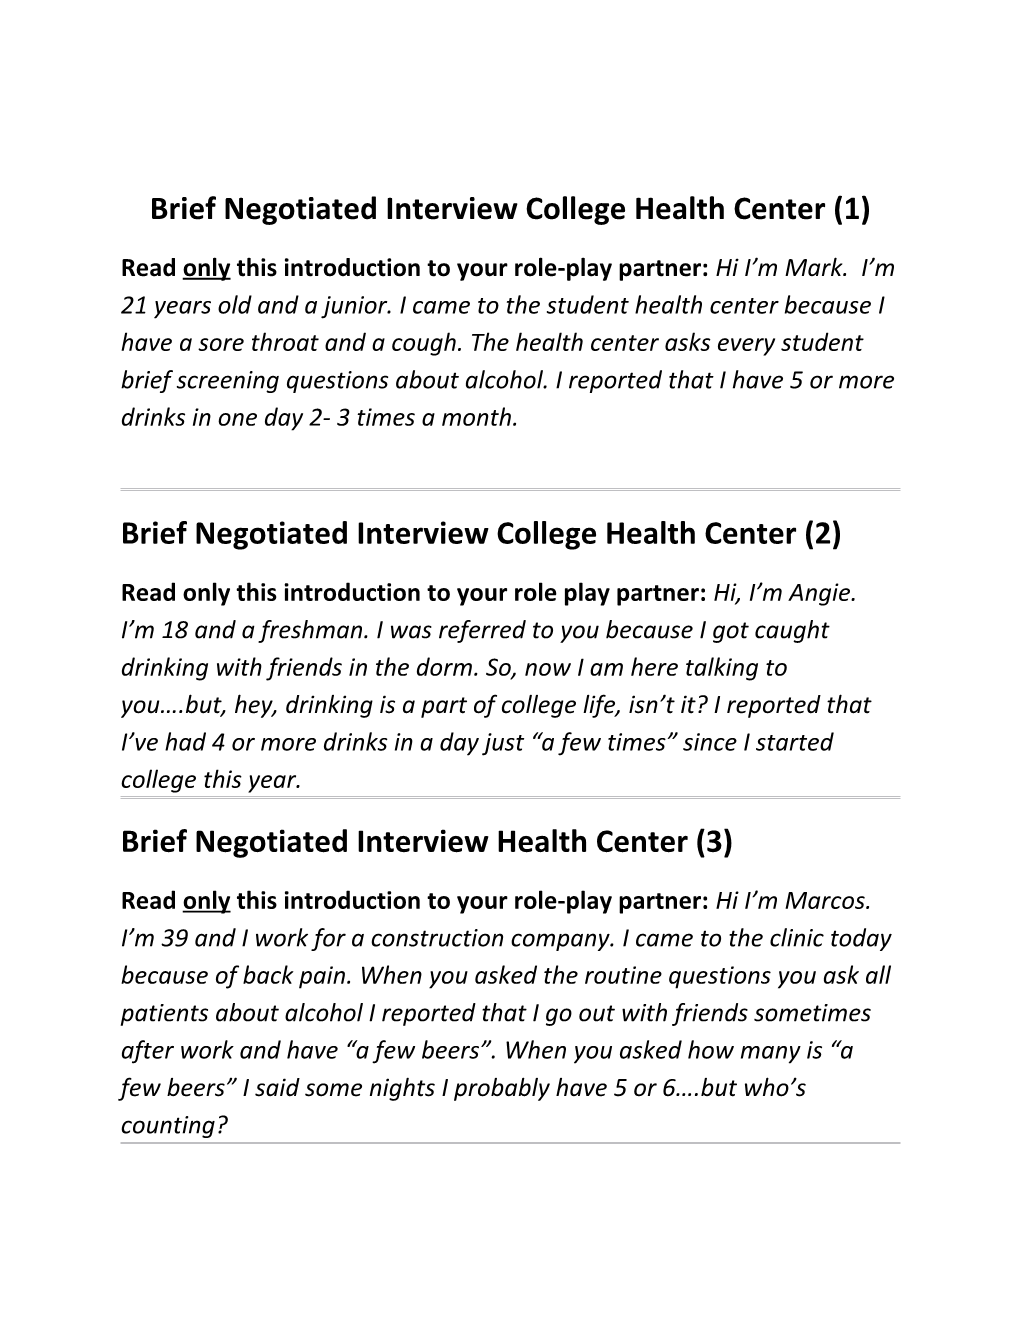 Brief Negotiated Interview College Health Center (1)